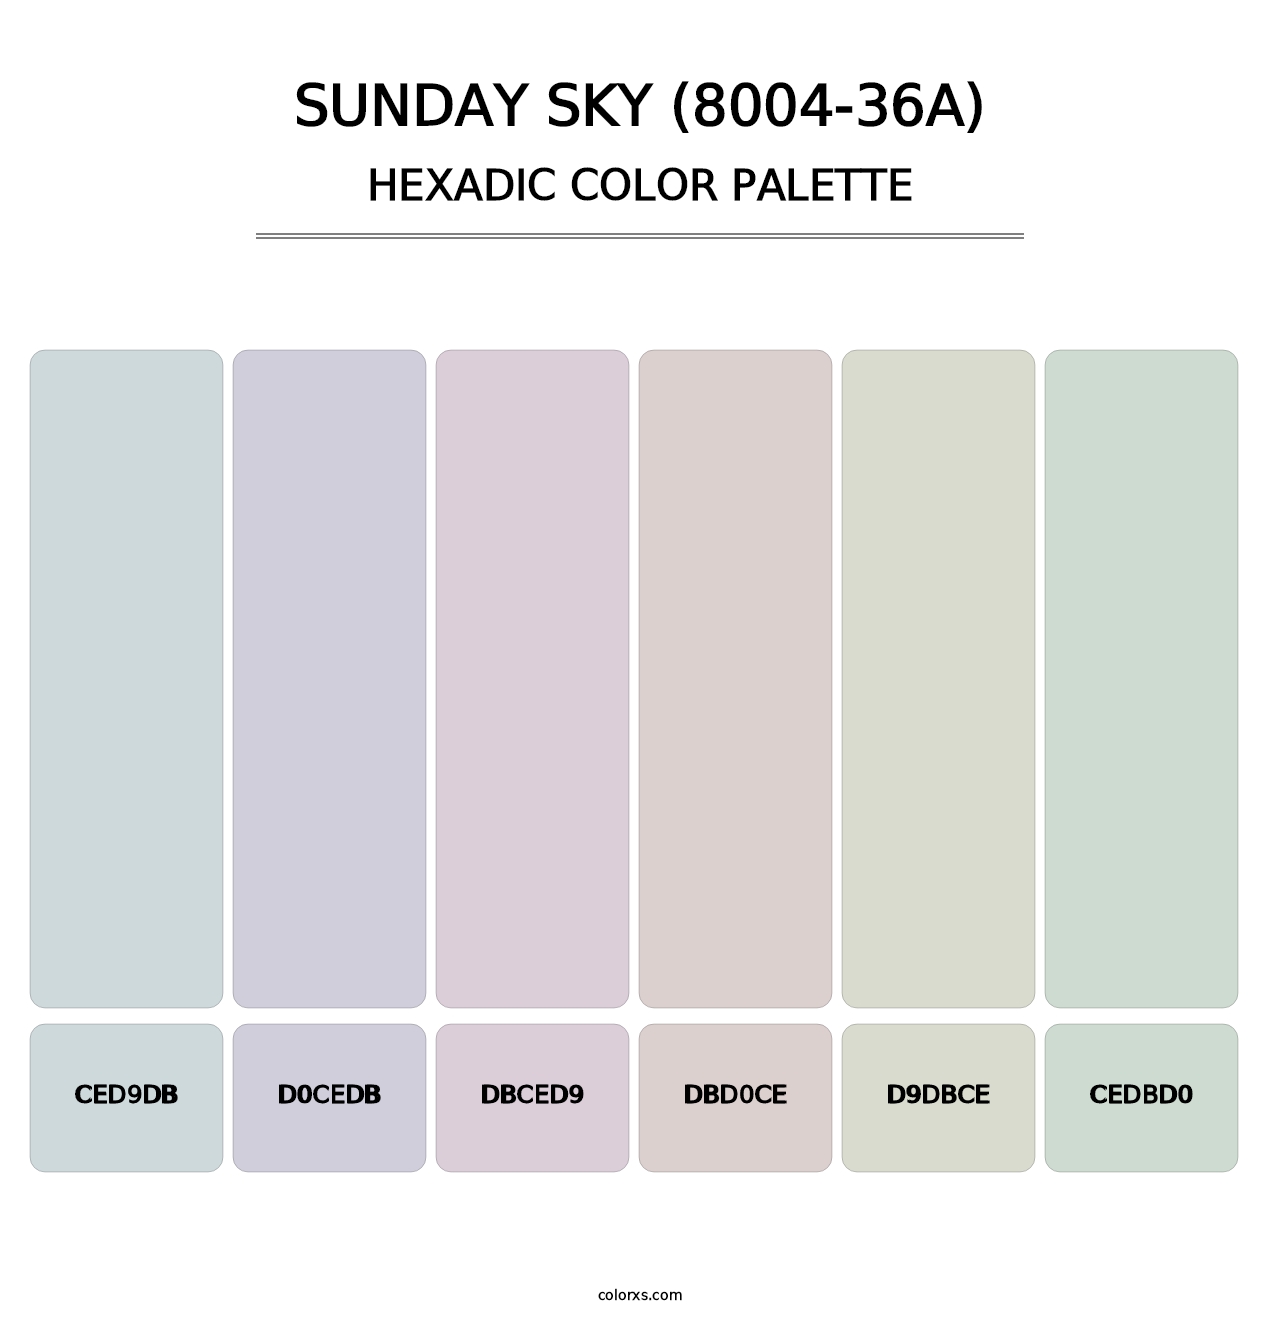 Sunday Sky (8004-36A) - Hexadic Color Palette